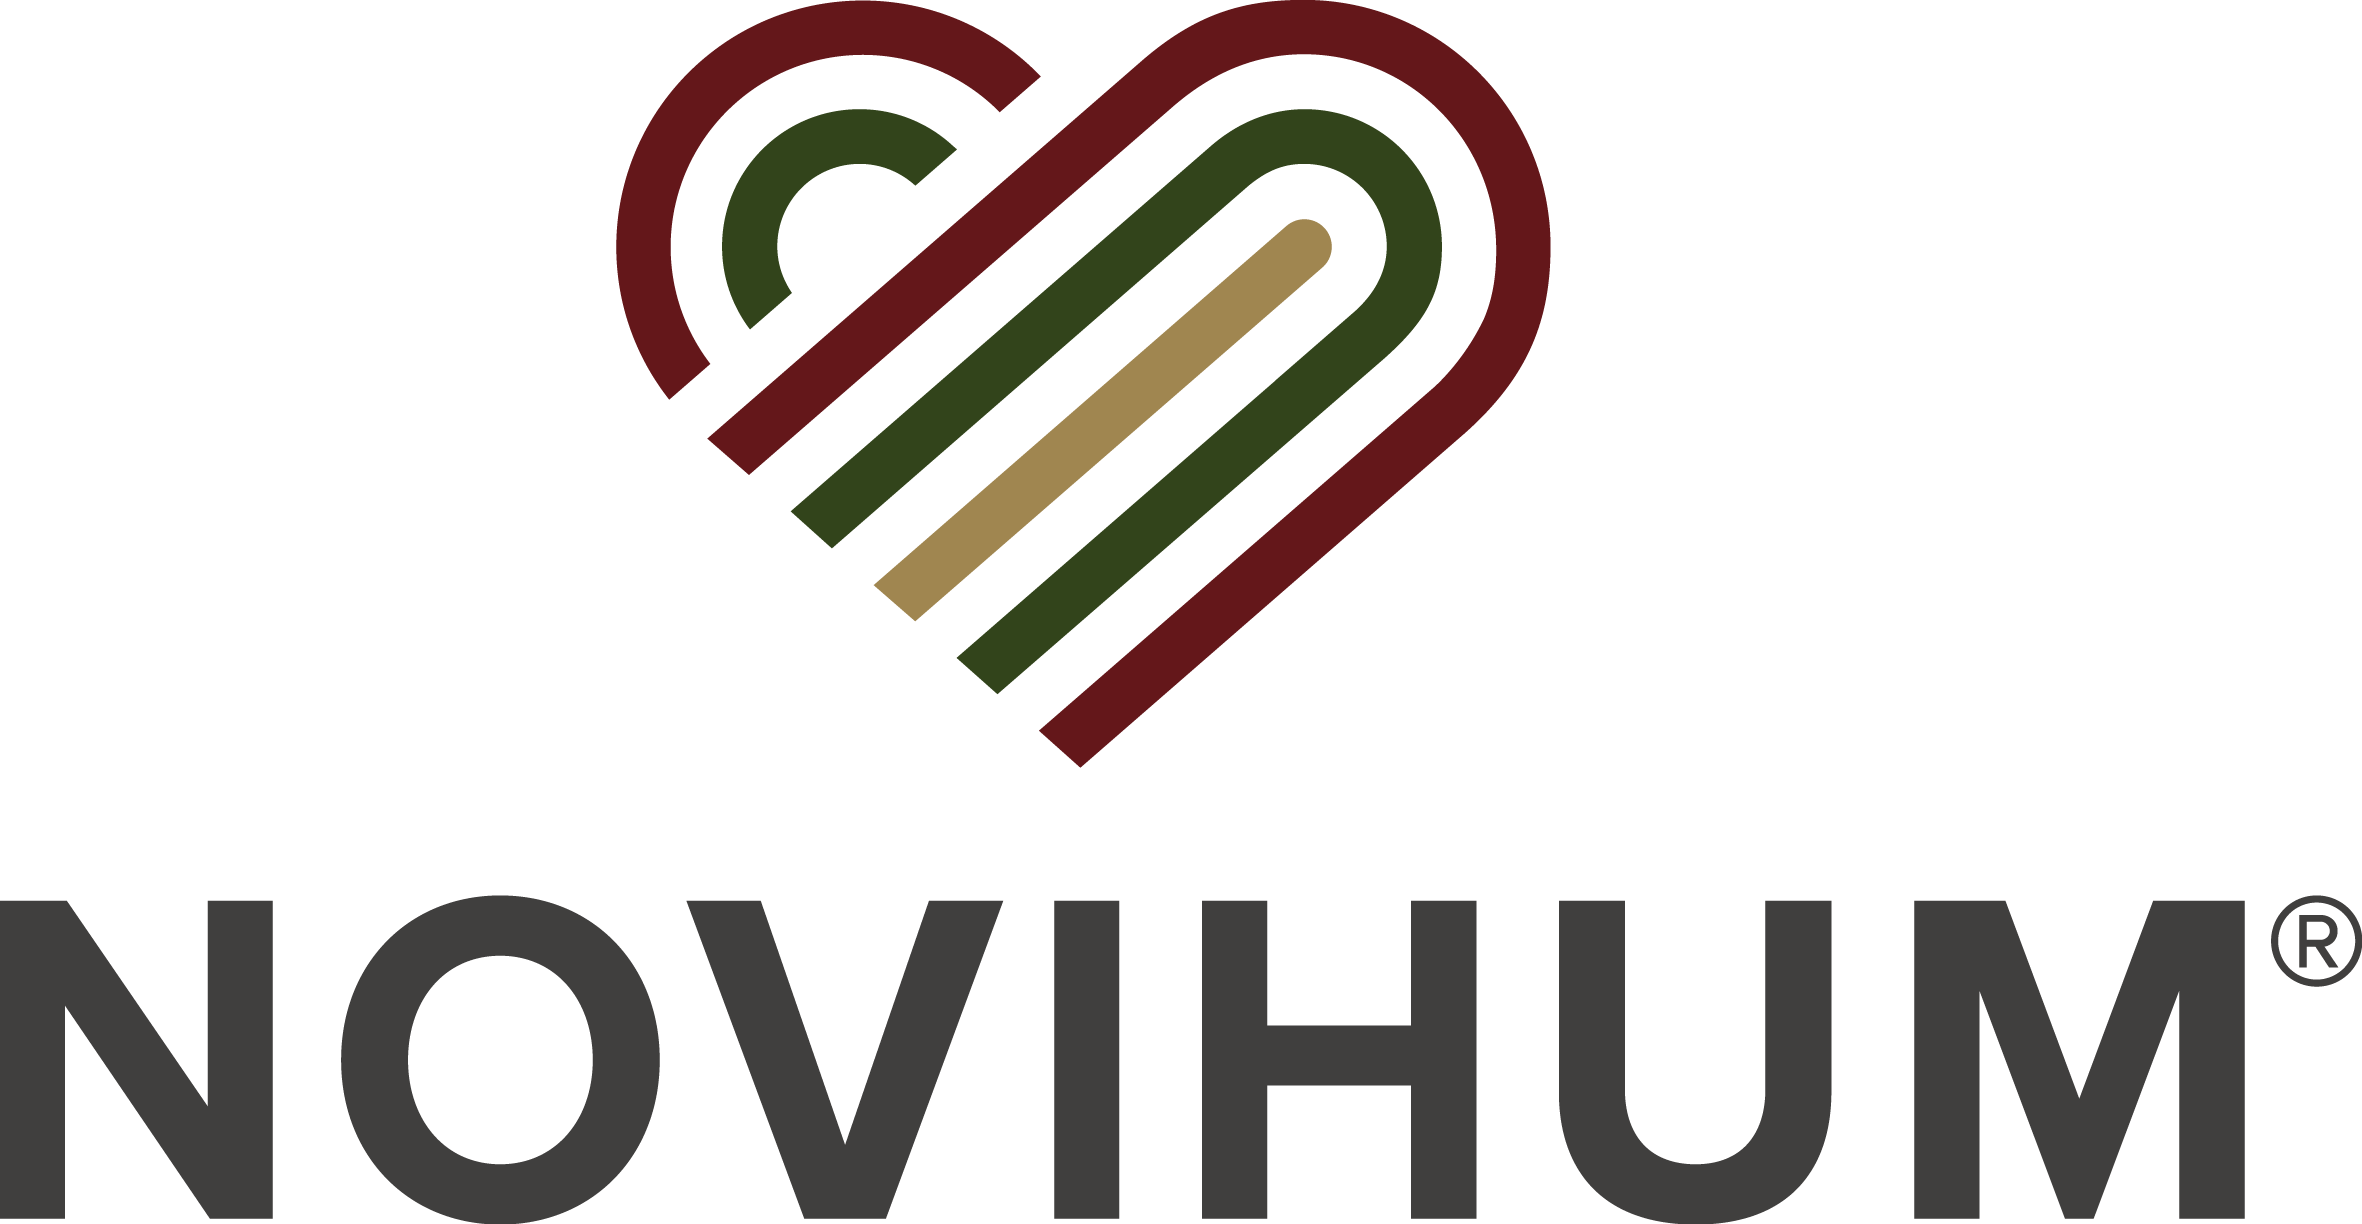 Novihum Technologies GmbH